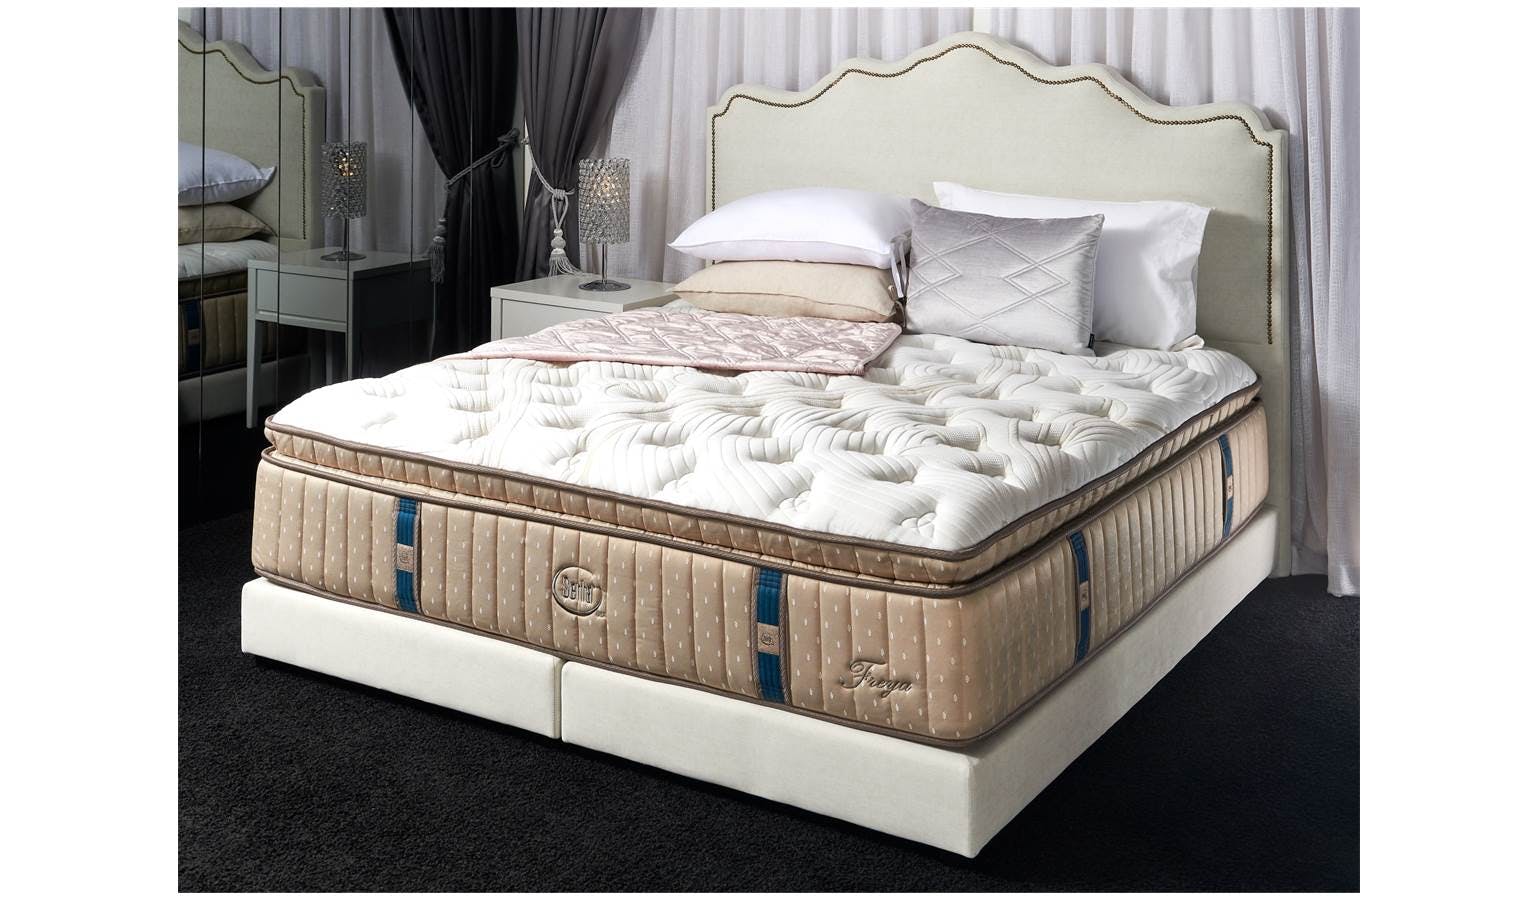 celestial latex mattress malaysia